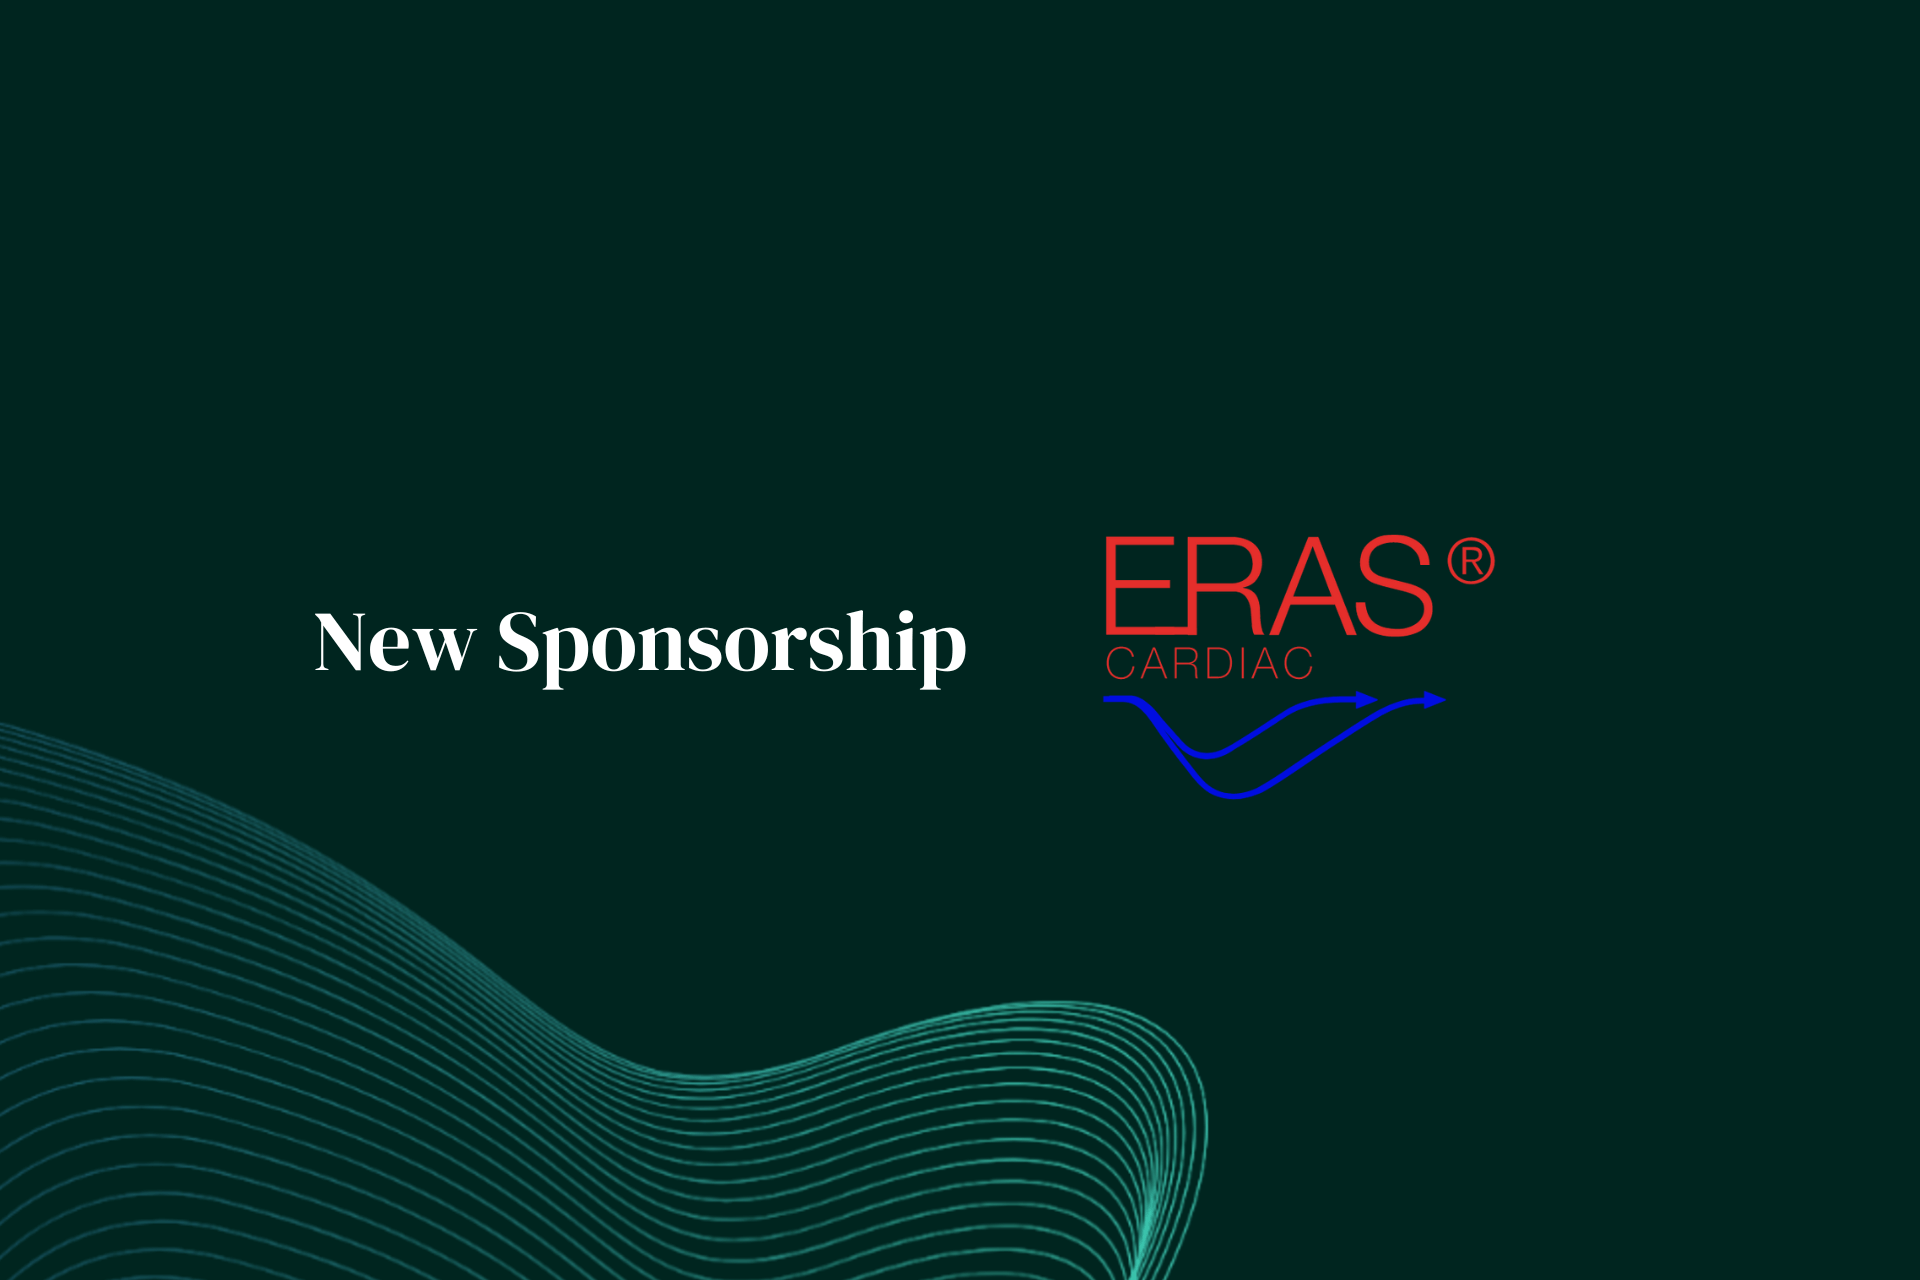 eras-cardiac-delirium-sponsorship